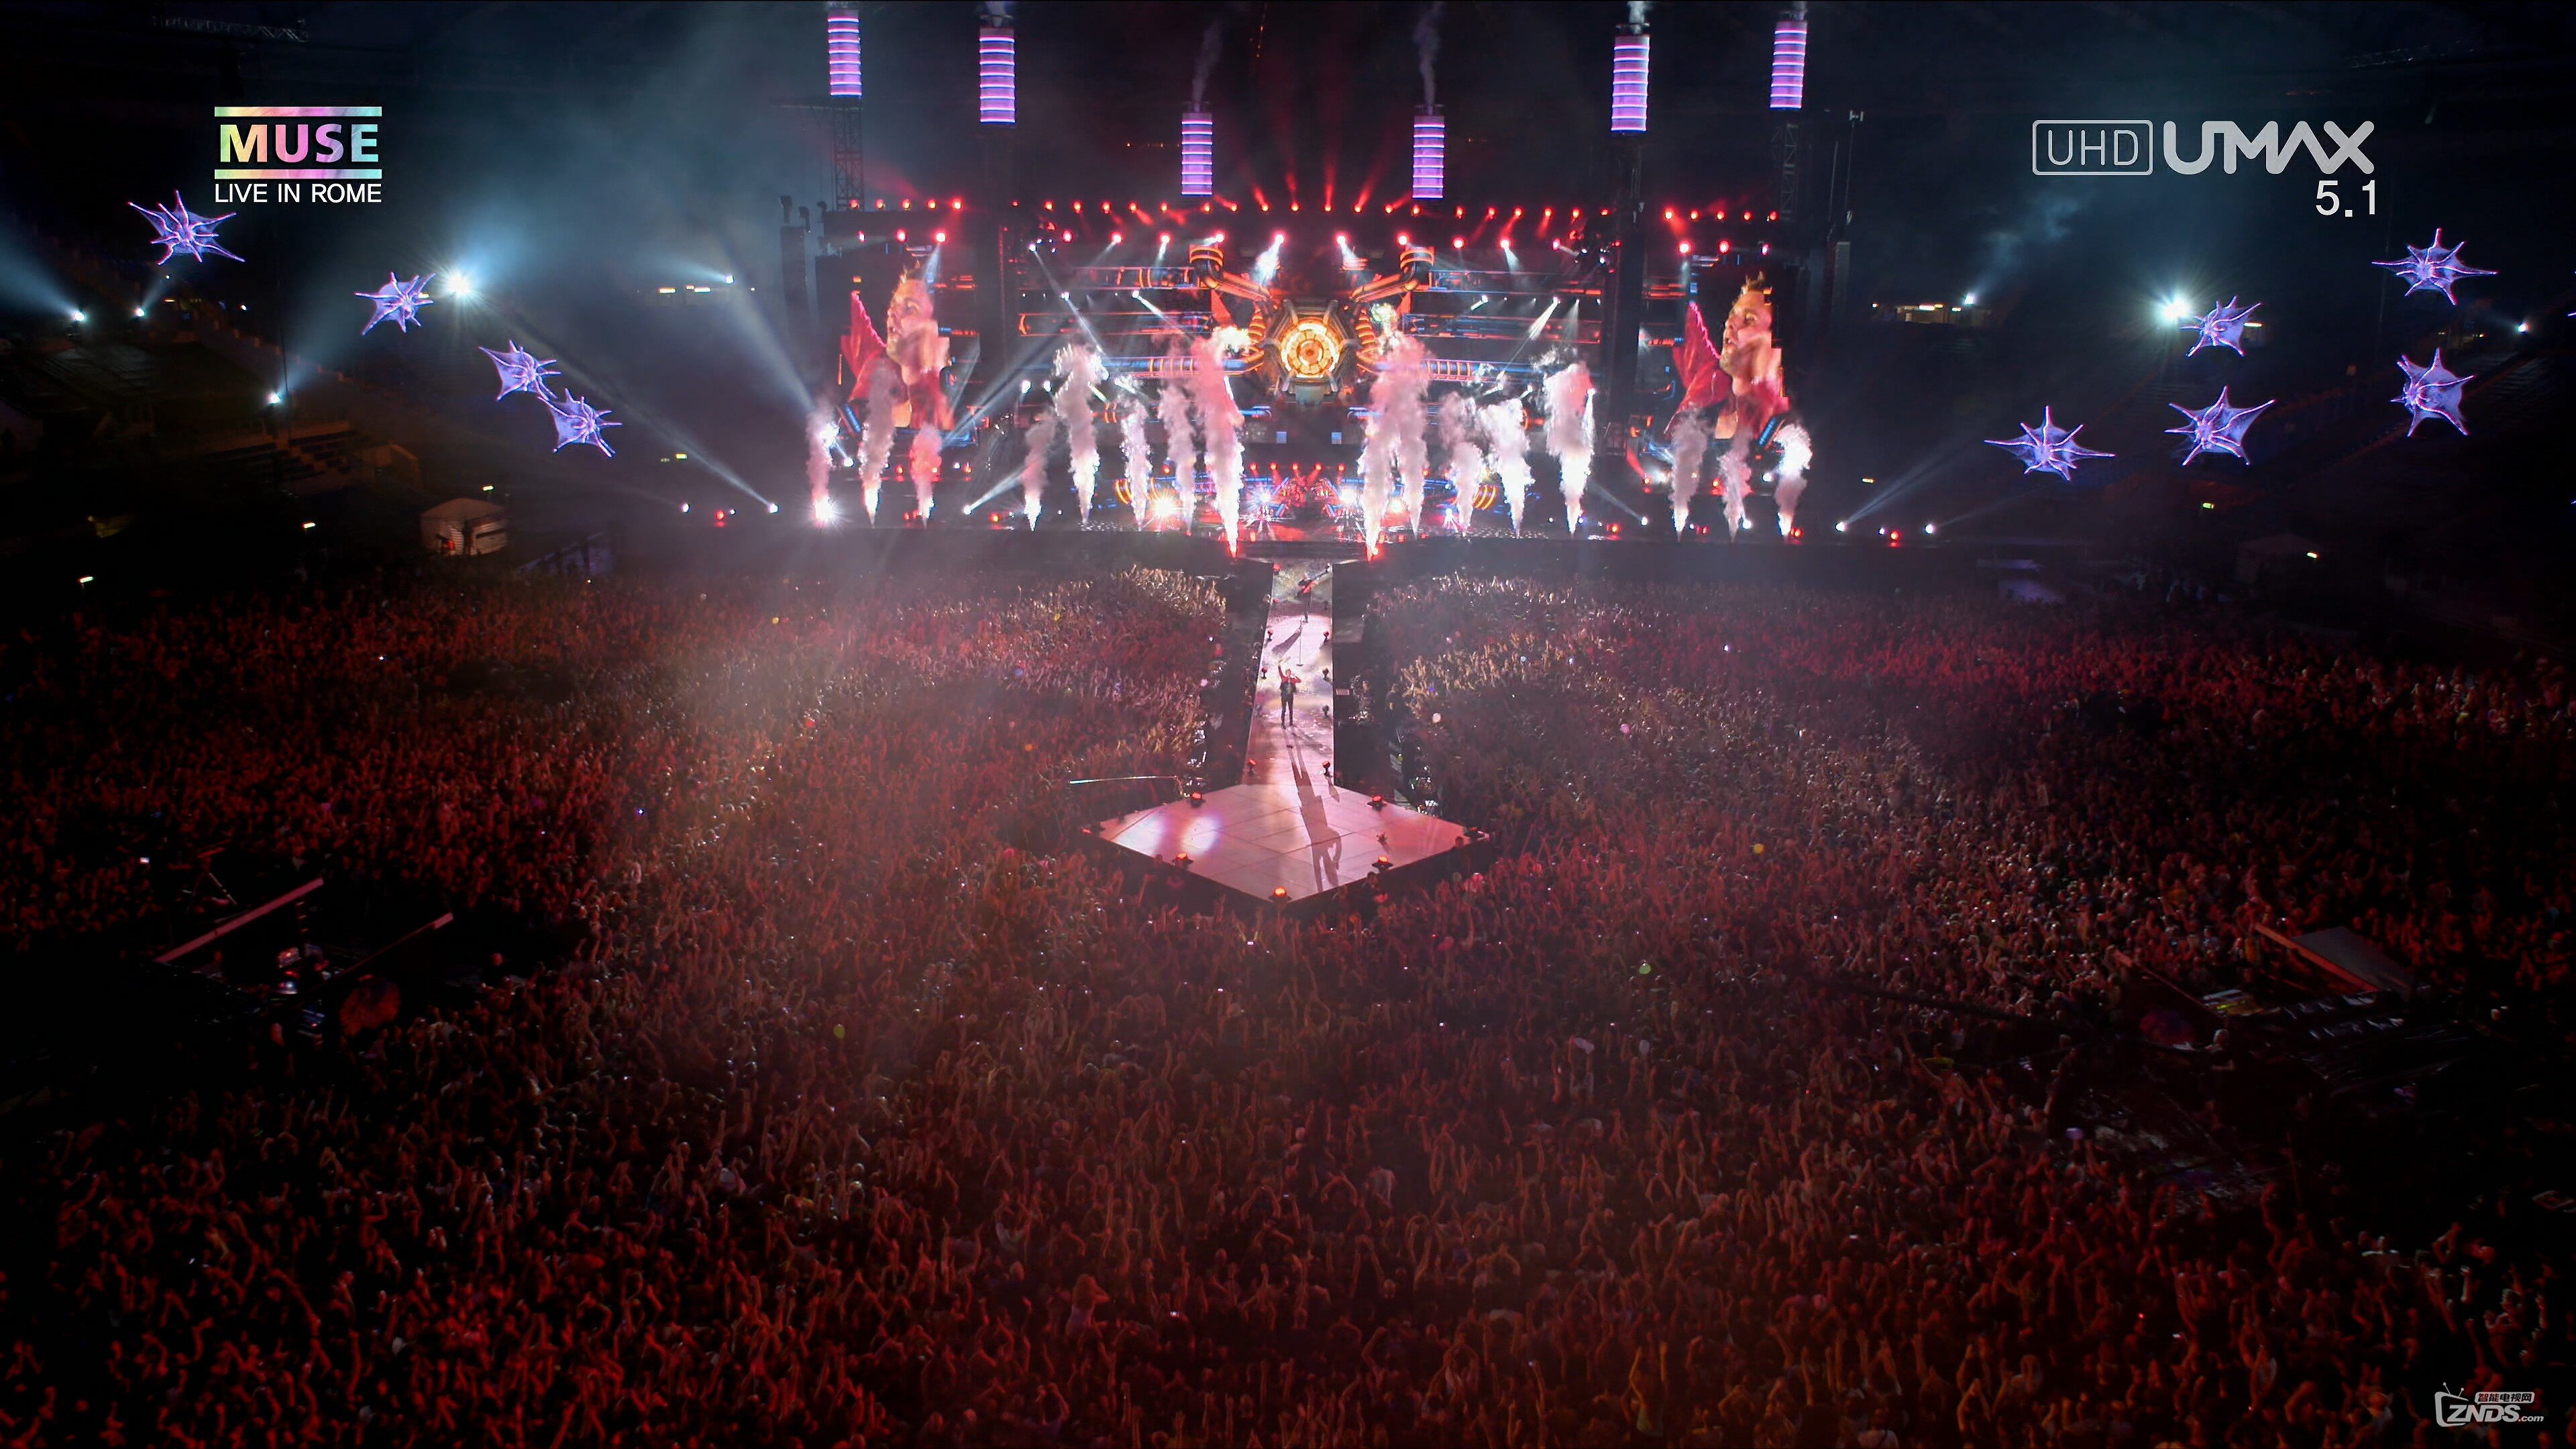 Muse.Live.At.Rome.Olympic.Stadium.2013.2160p.UHDTV.HEVC.mkv_20160313_002101.734.jpg